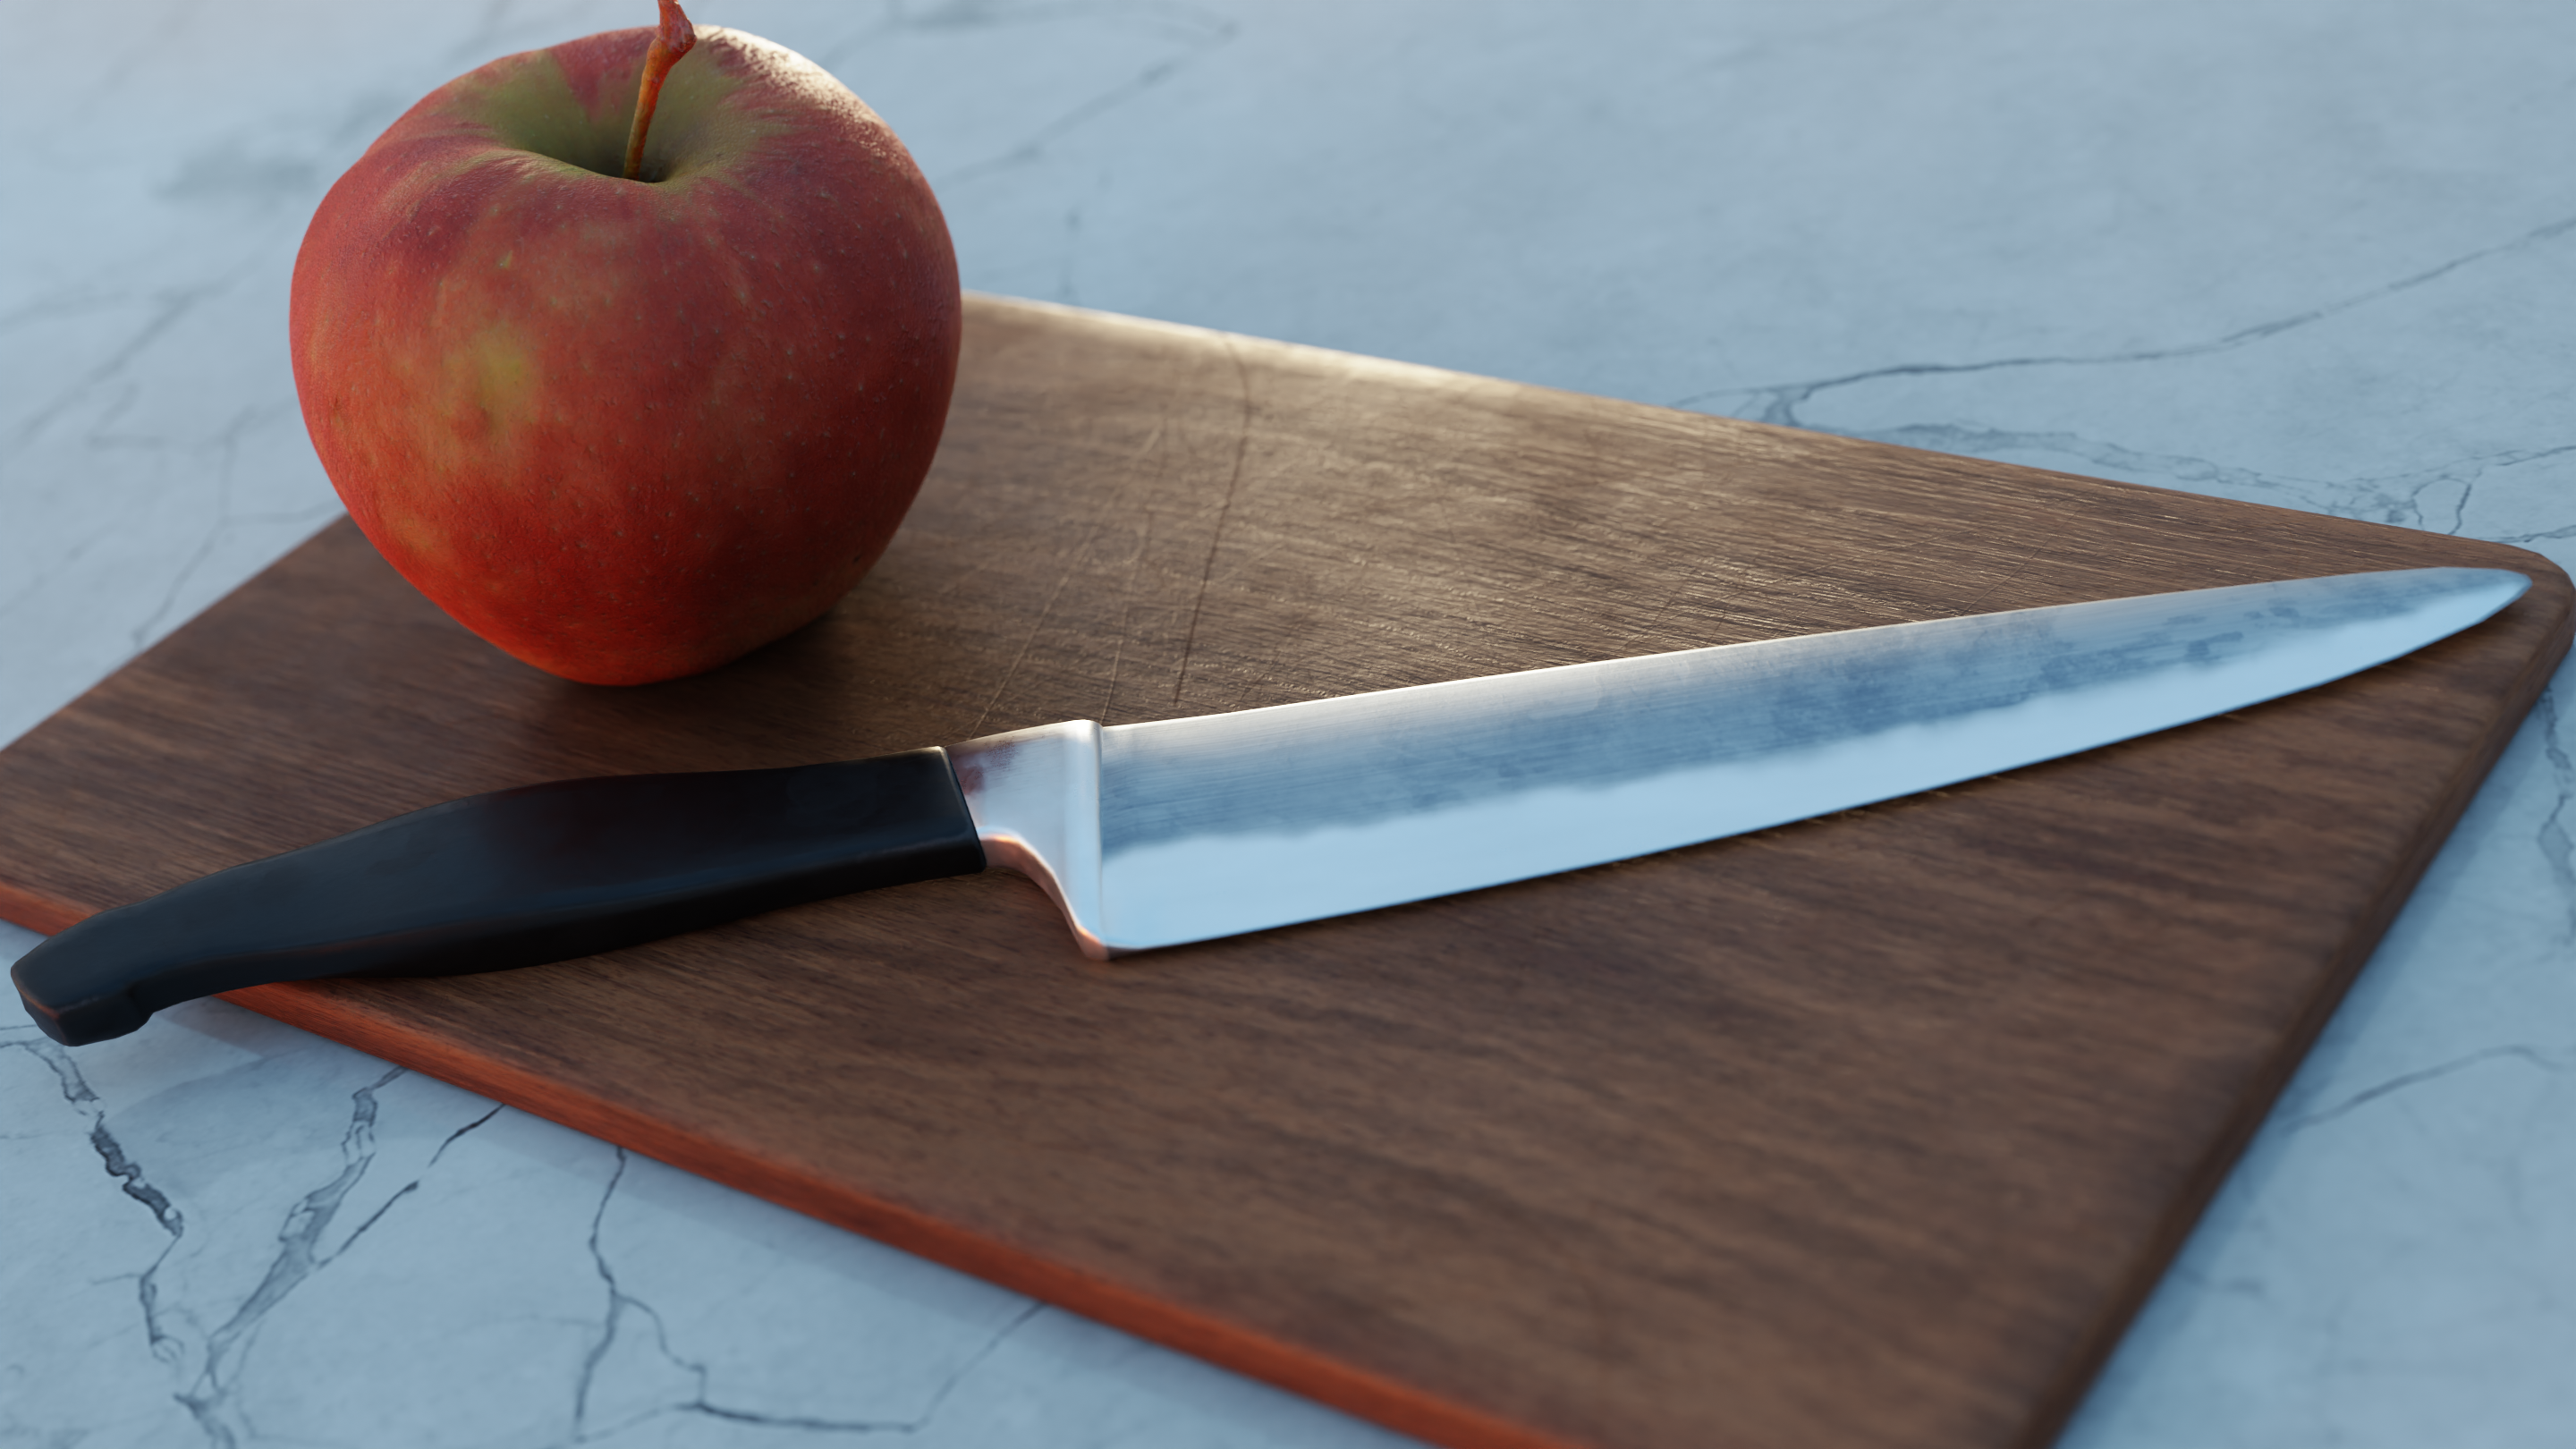 Kitchen Knife 2 - Finished Projects - Blender Artists Community